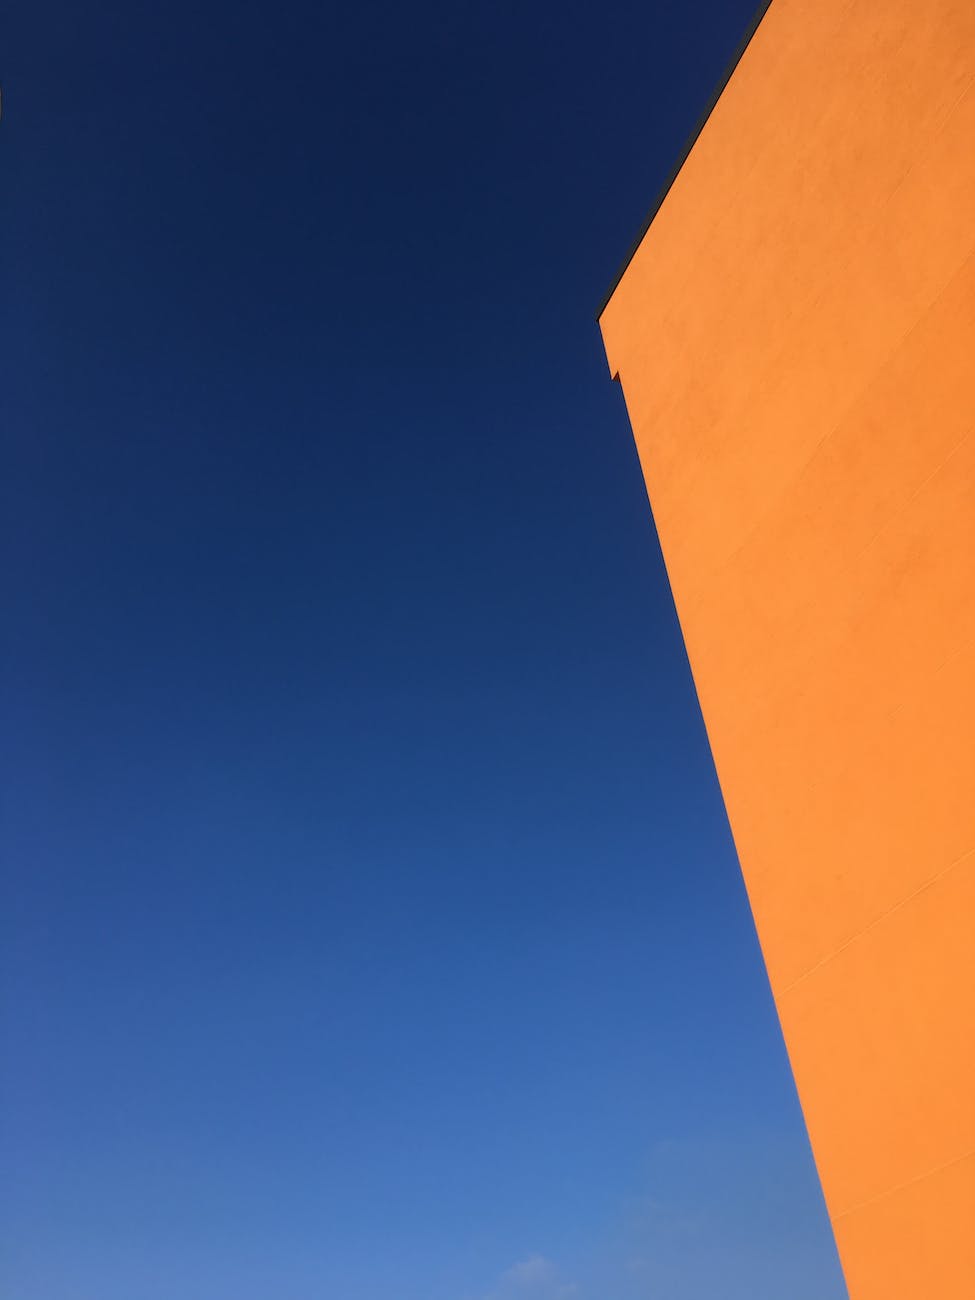 Black and Orange Wallpaper